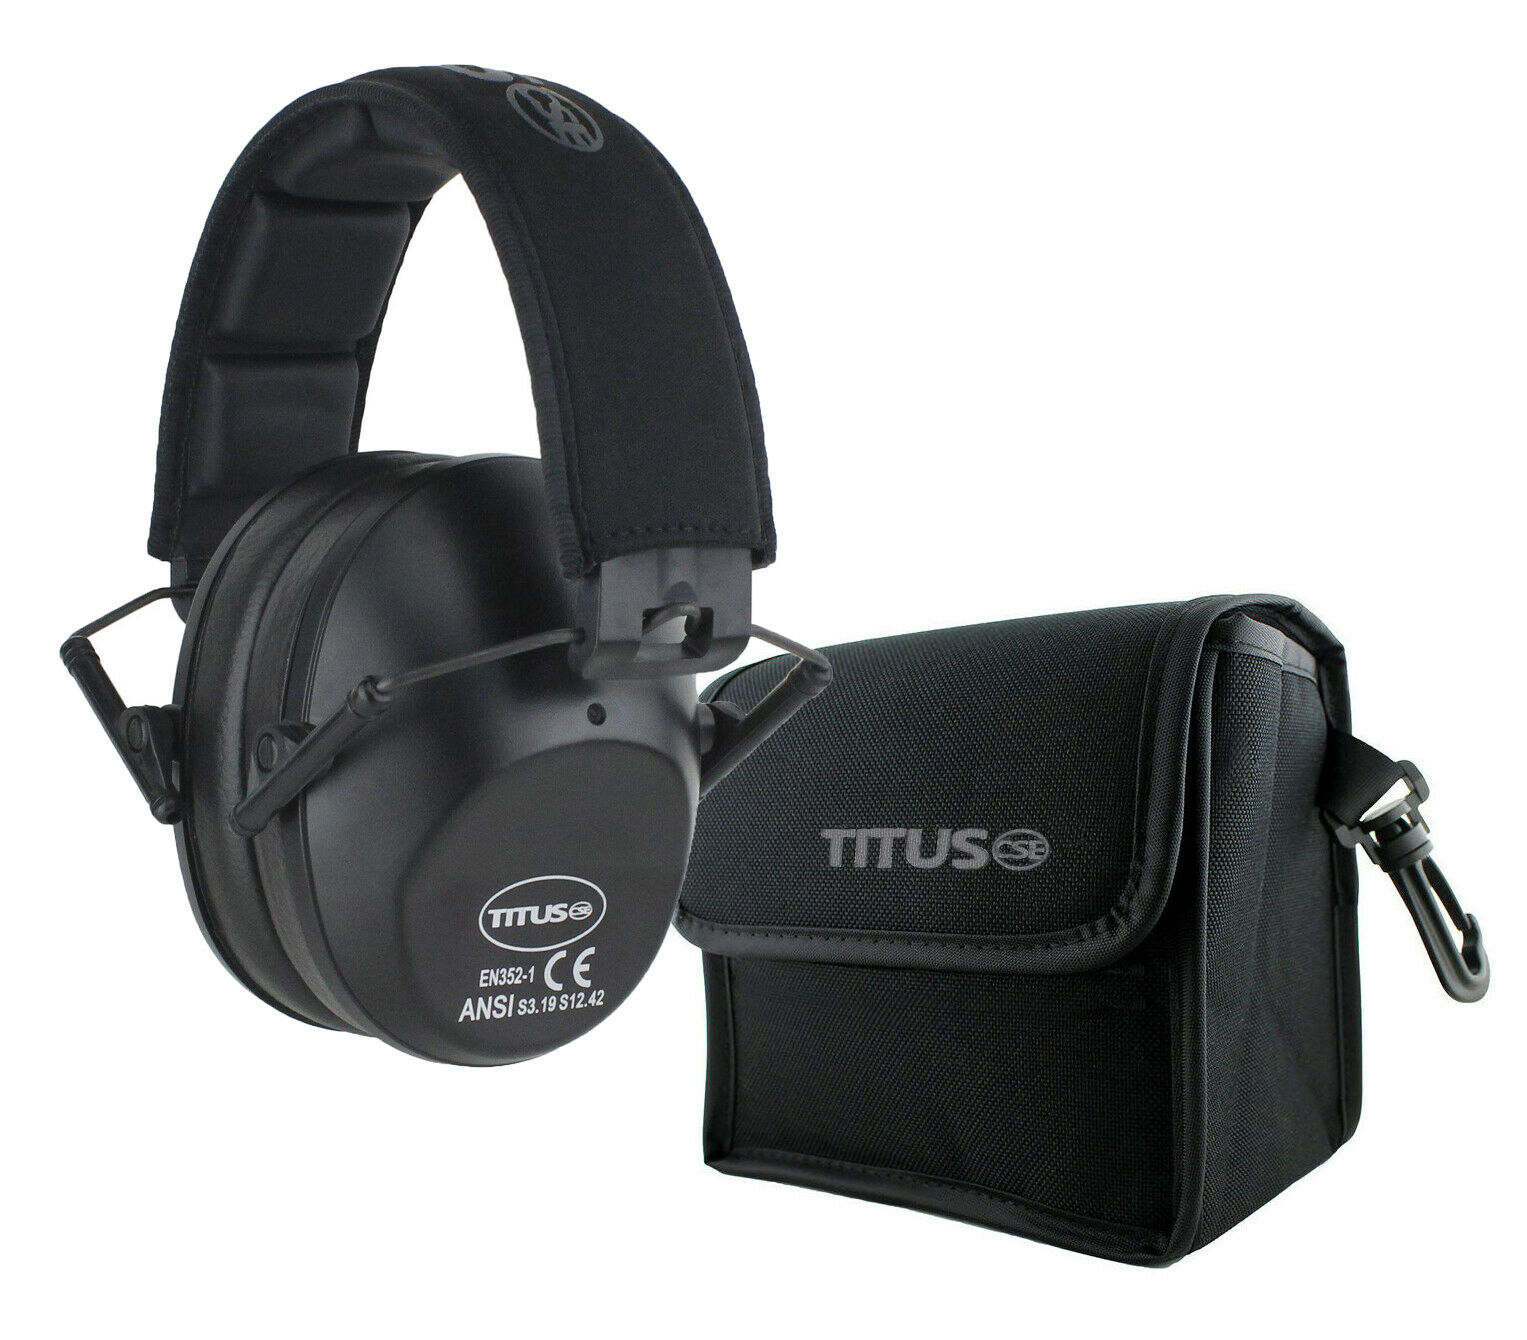 Titus Shooting Gun Range Noise Reduction Ear Muffs High 34 Nrr Protection Slim